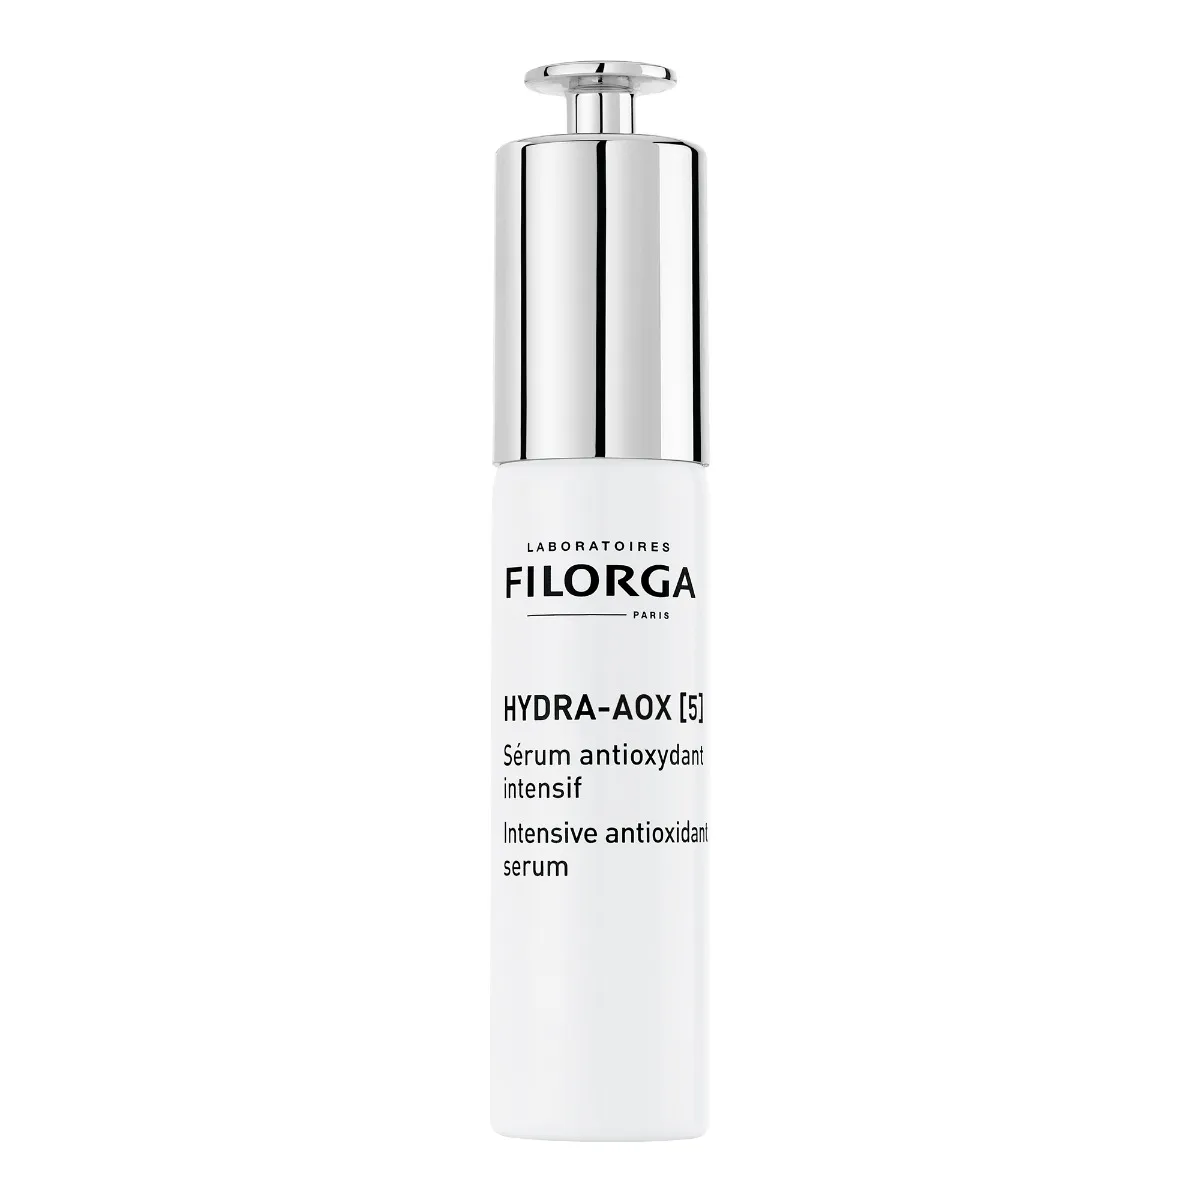 filorga-hydra-aox-5-serum-antioxydant-30ml-3540550013442